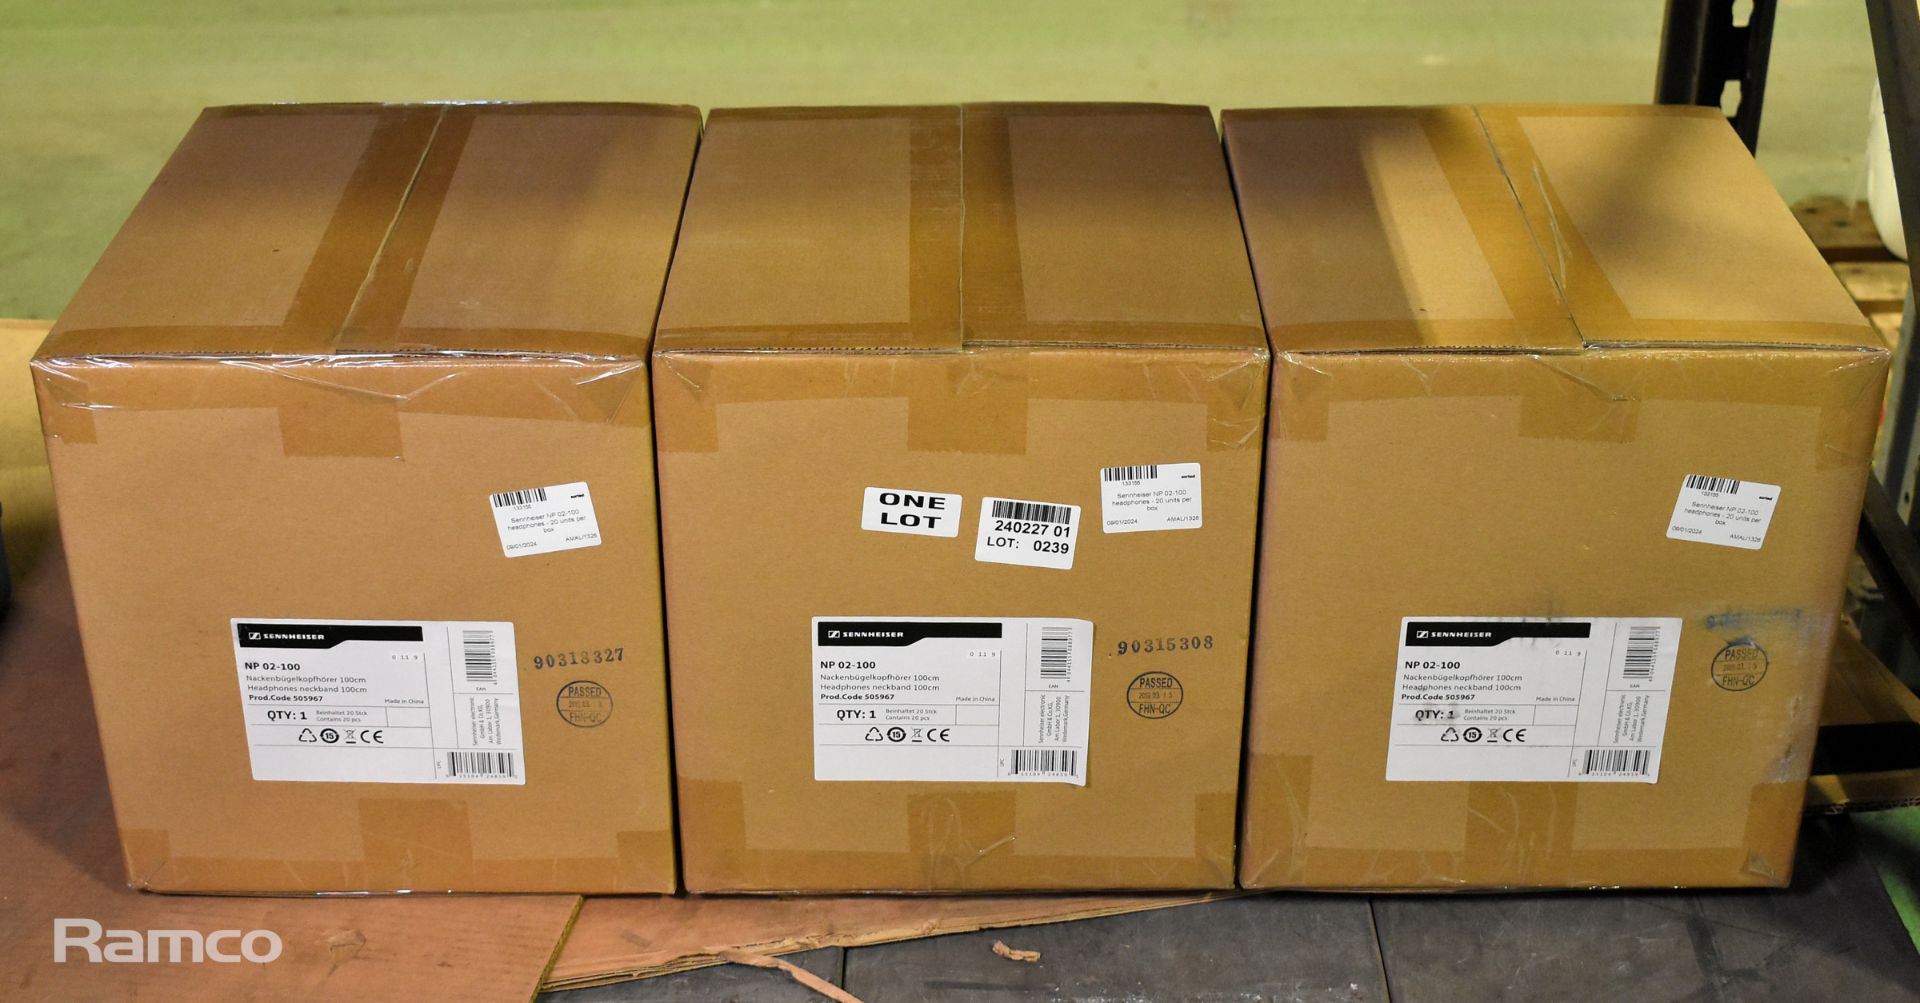 3x boxes of Sennheiser NP 02-100 headphones - 20 units per box - Image 4 of 5